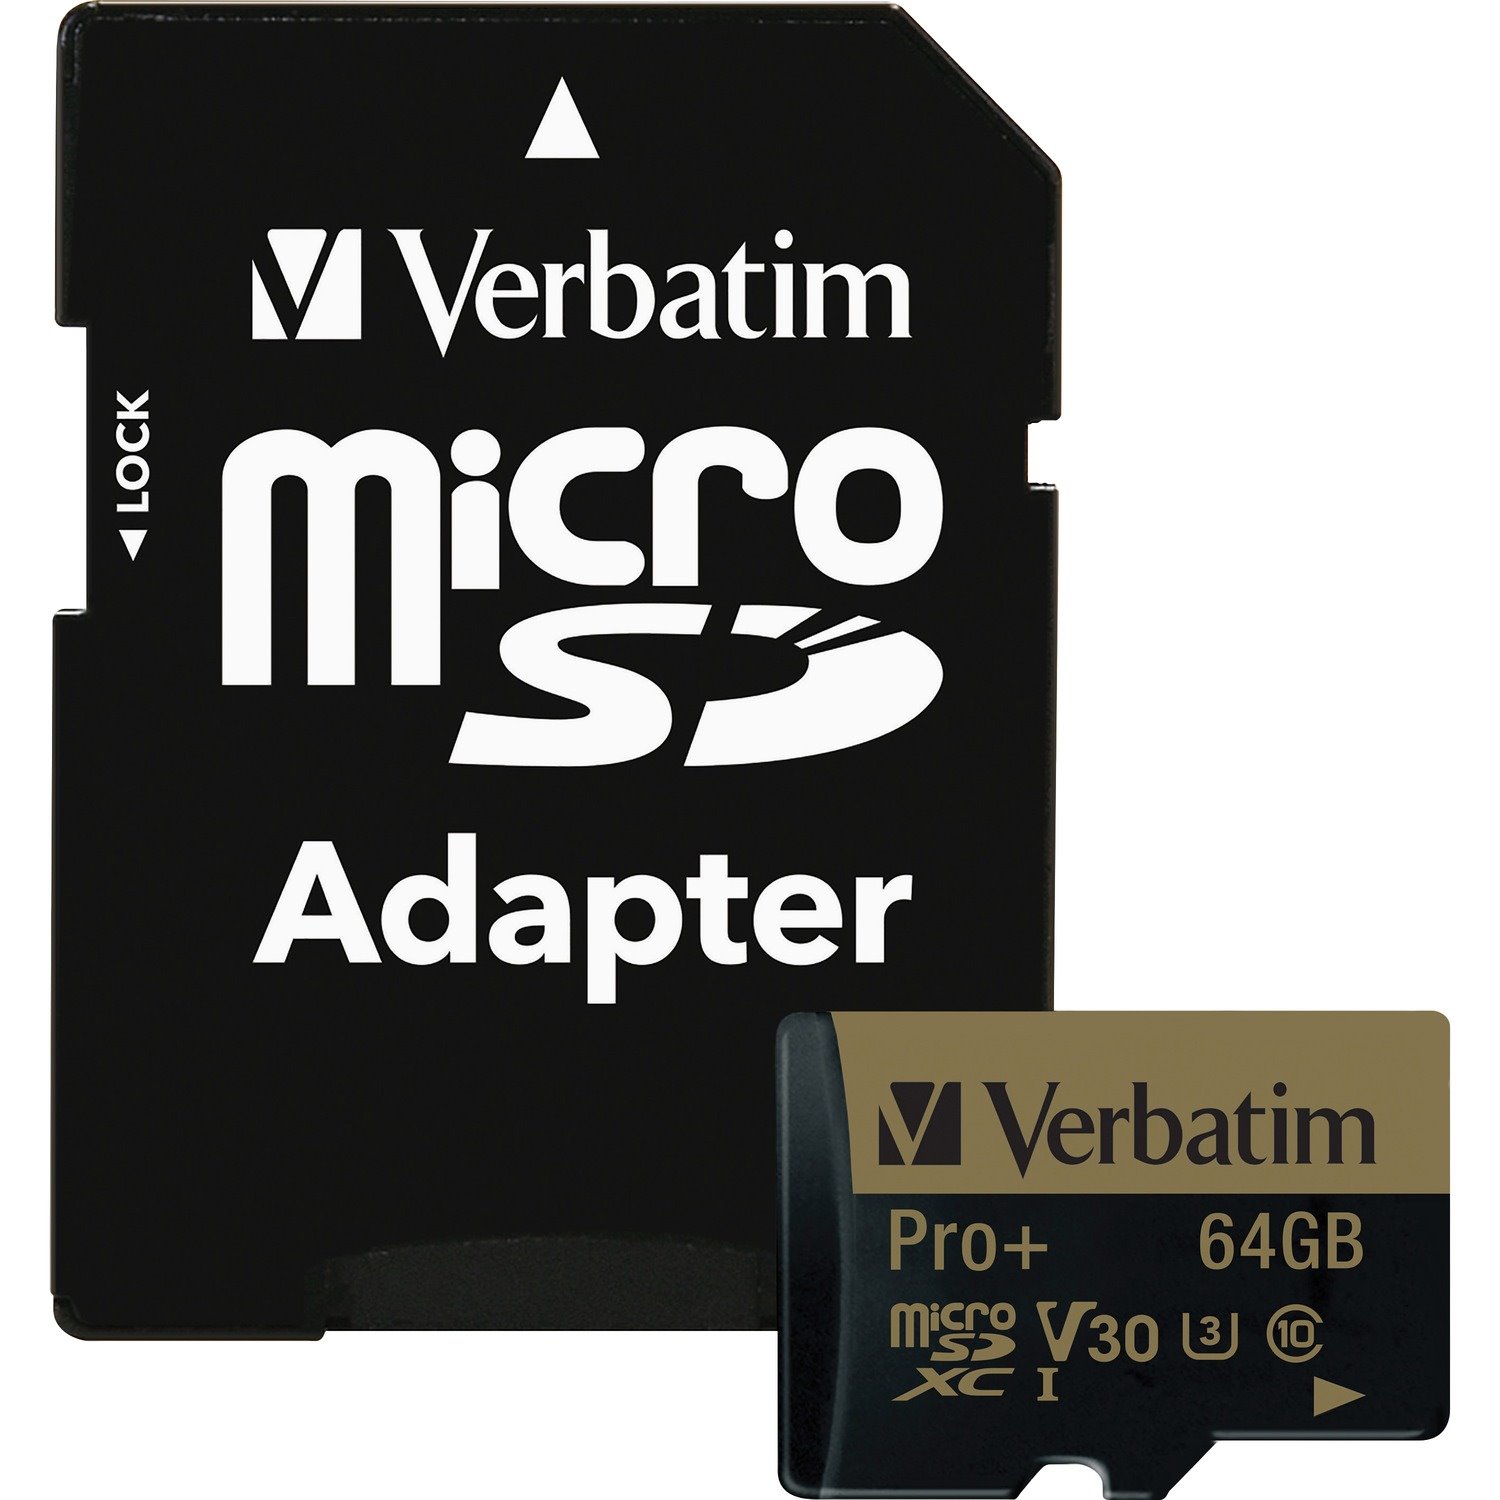 64GB Pro Plus 600X microSDHC Memory Card with Adapter, UHS-I V30 U3 Class 10